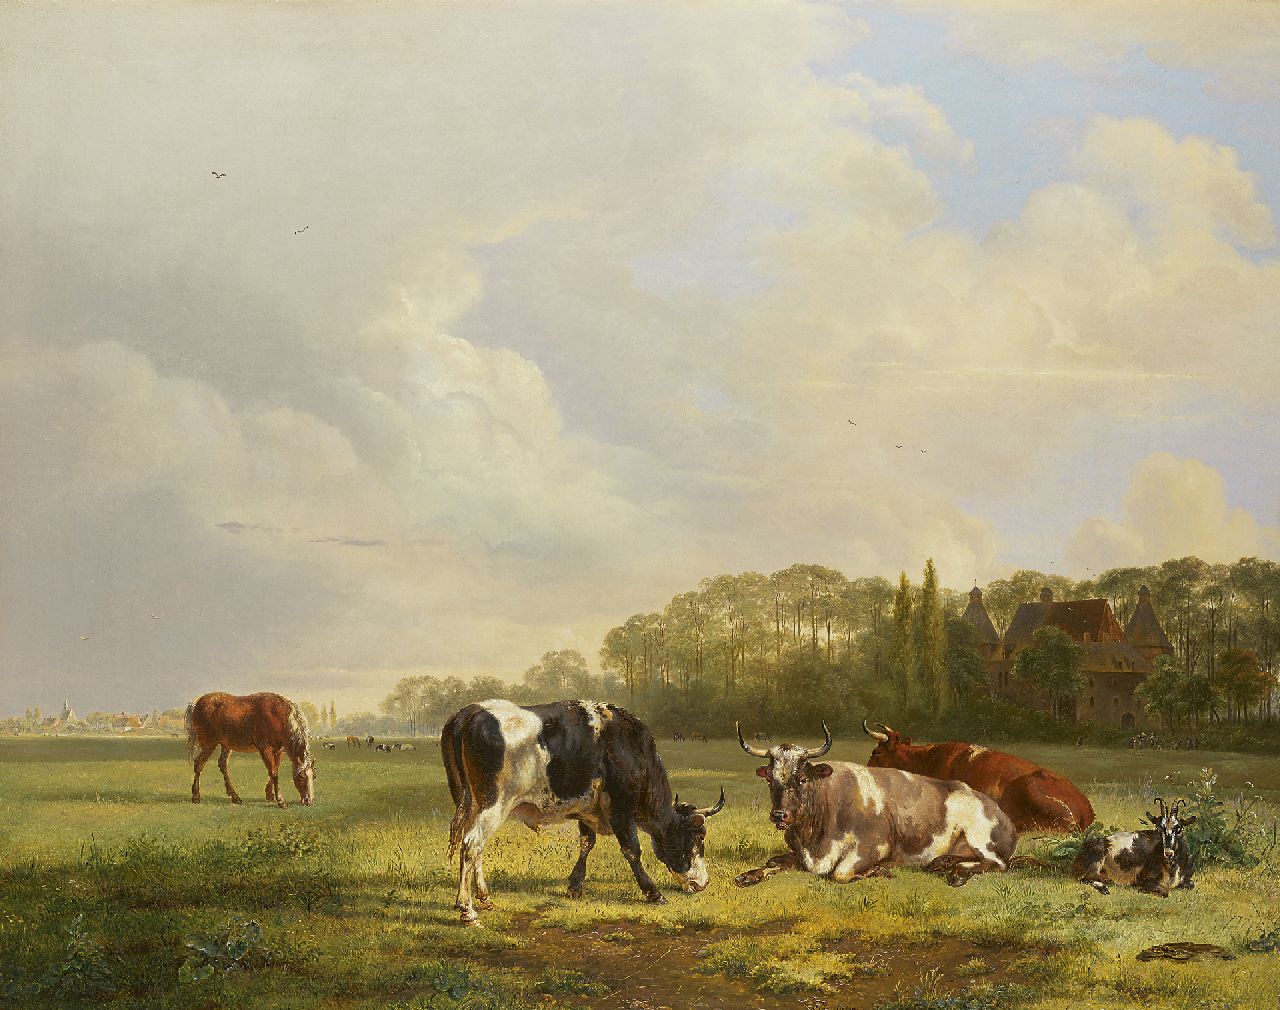 Os P.G. van | Pieter Gerardus van Os, Cattle at pasture, Öl auf Leinwand 69,7 x 88,0 cm, signed r.o.c. und dated 1834